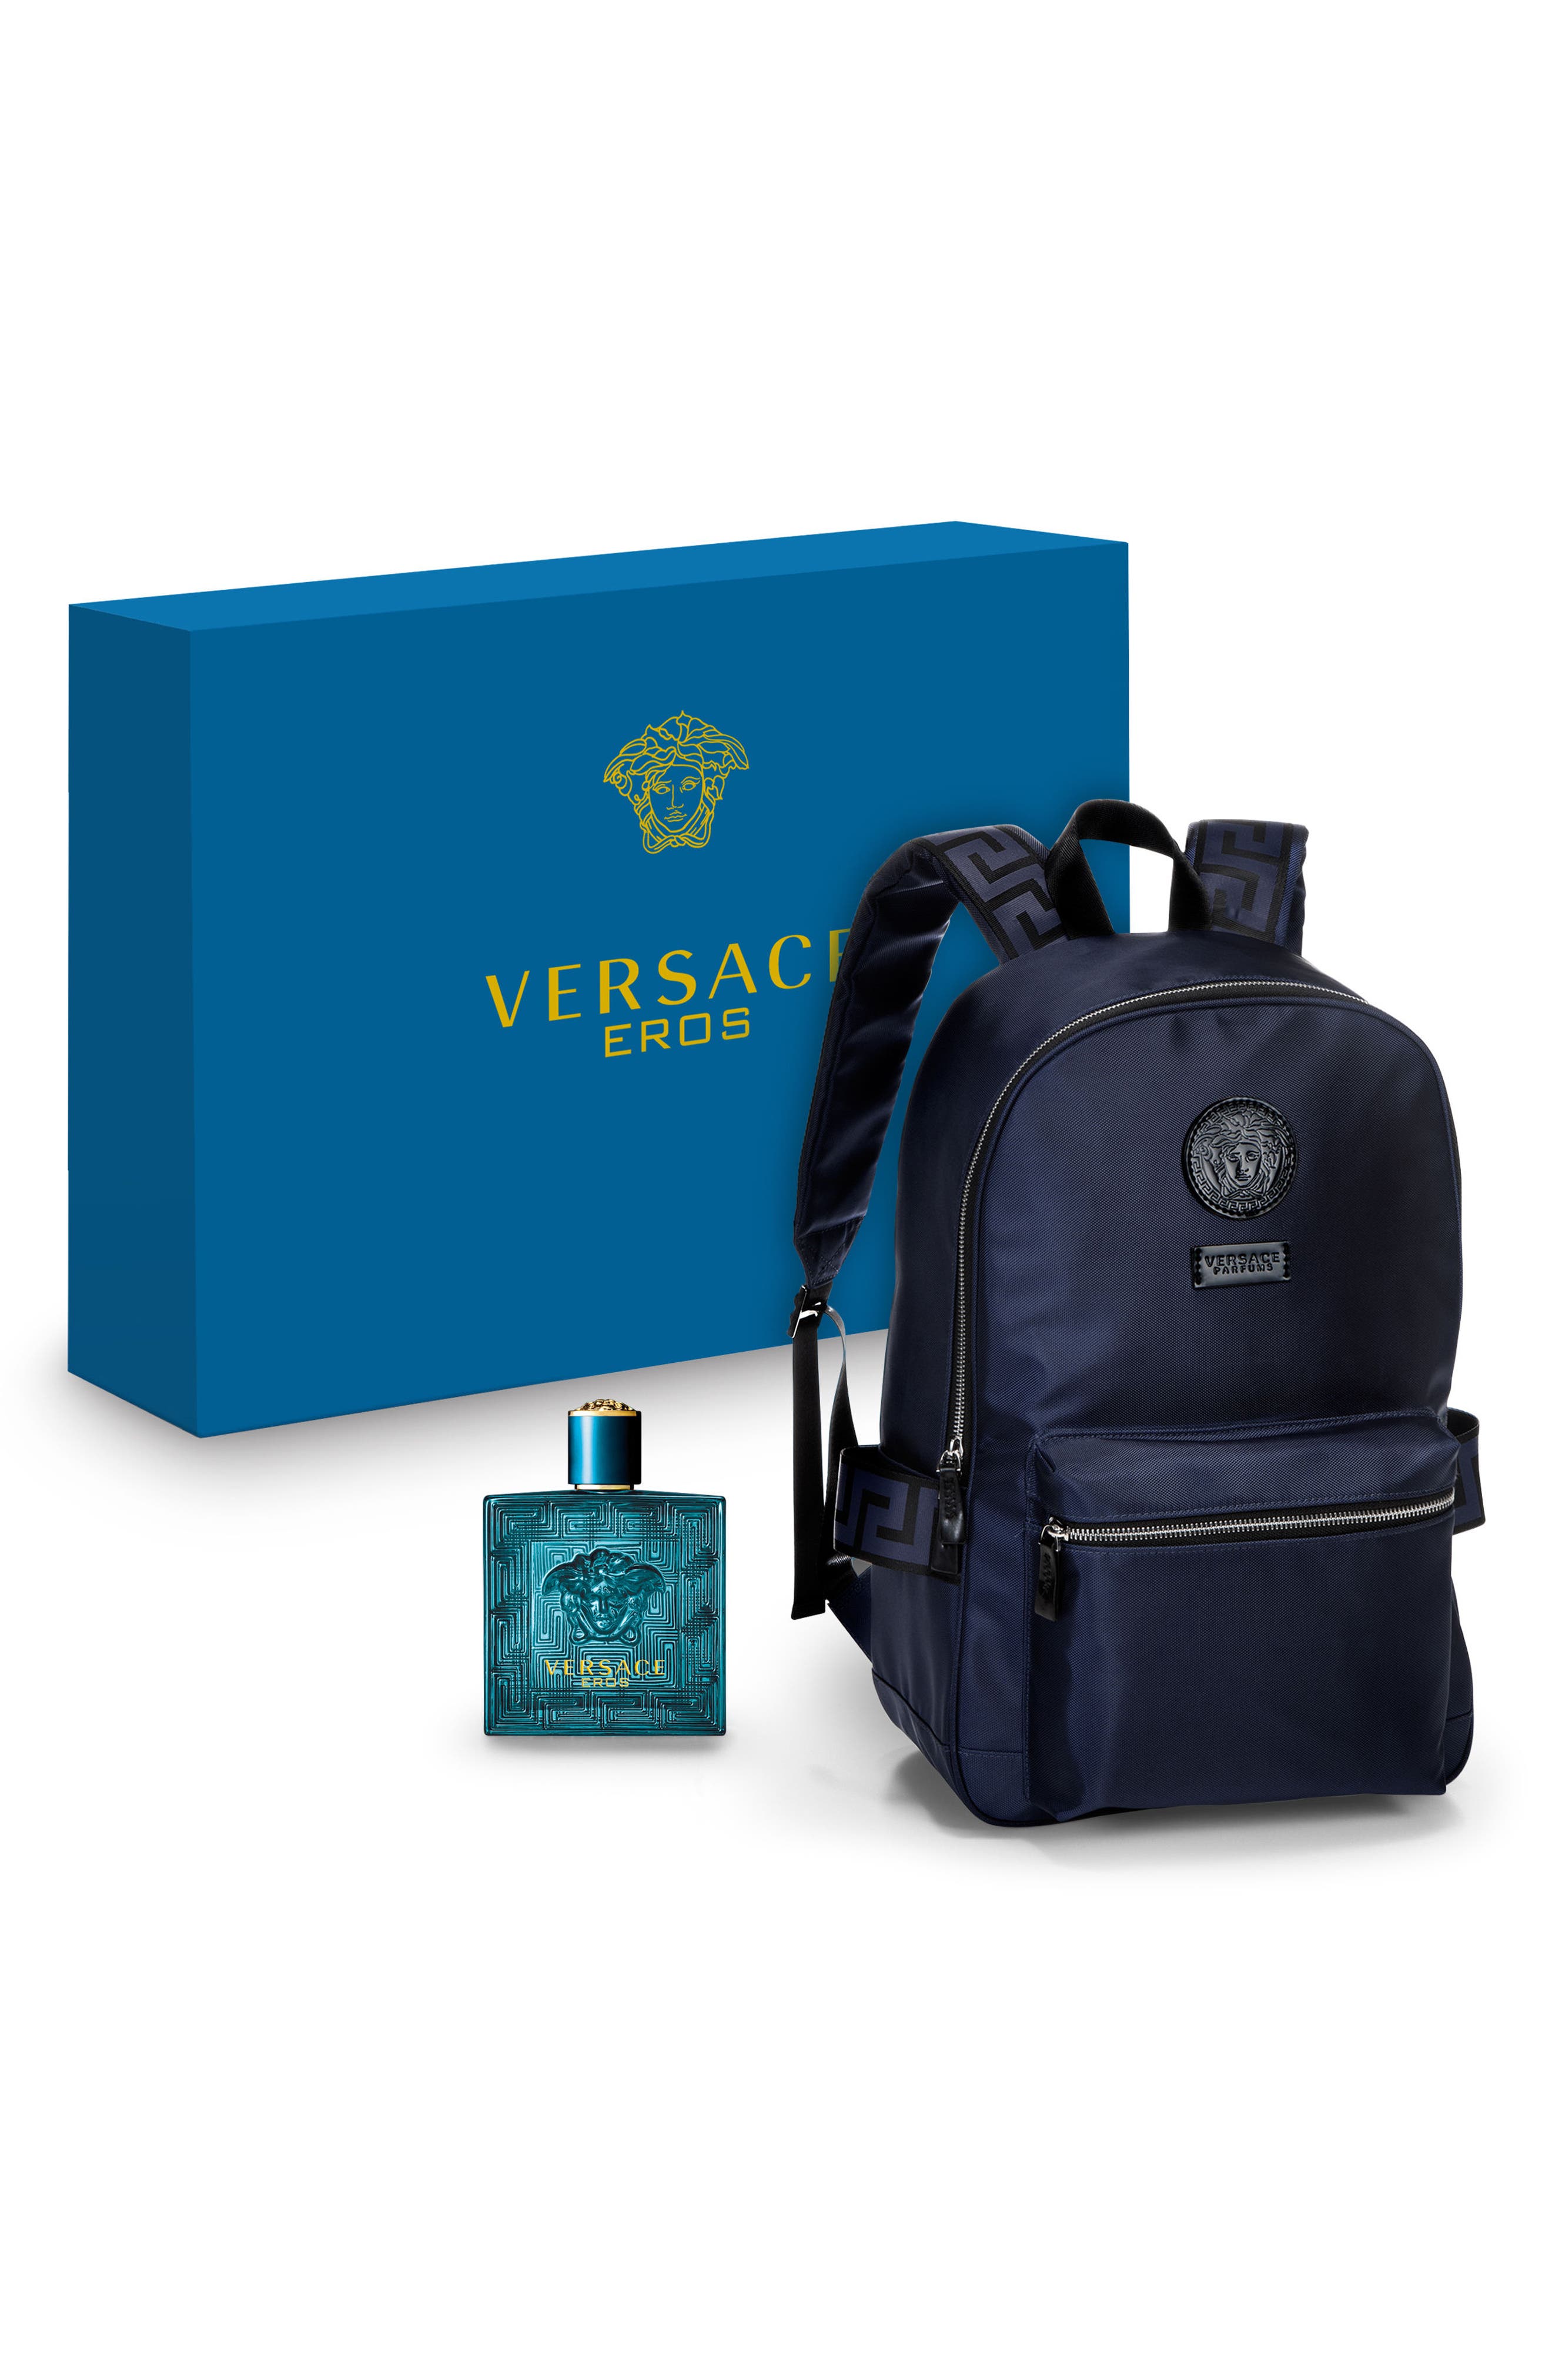 Versace Eros Eau de Toilette \u0026 Backpack 